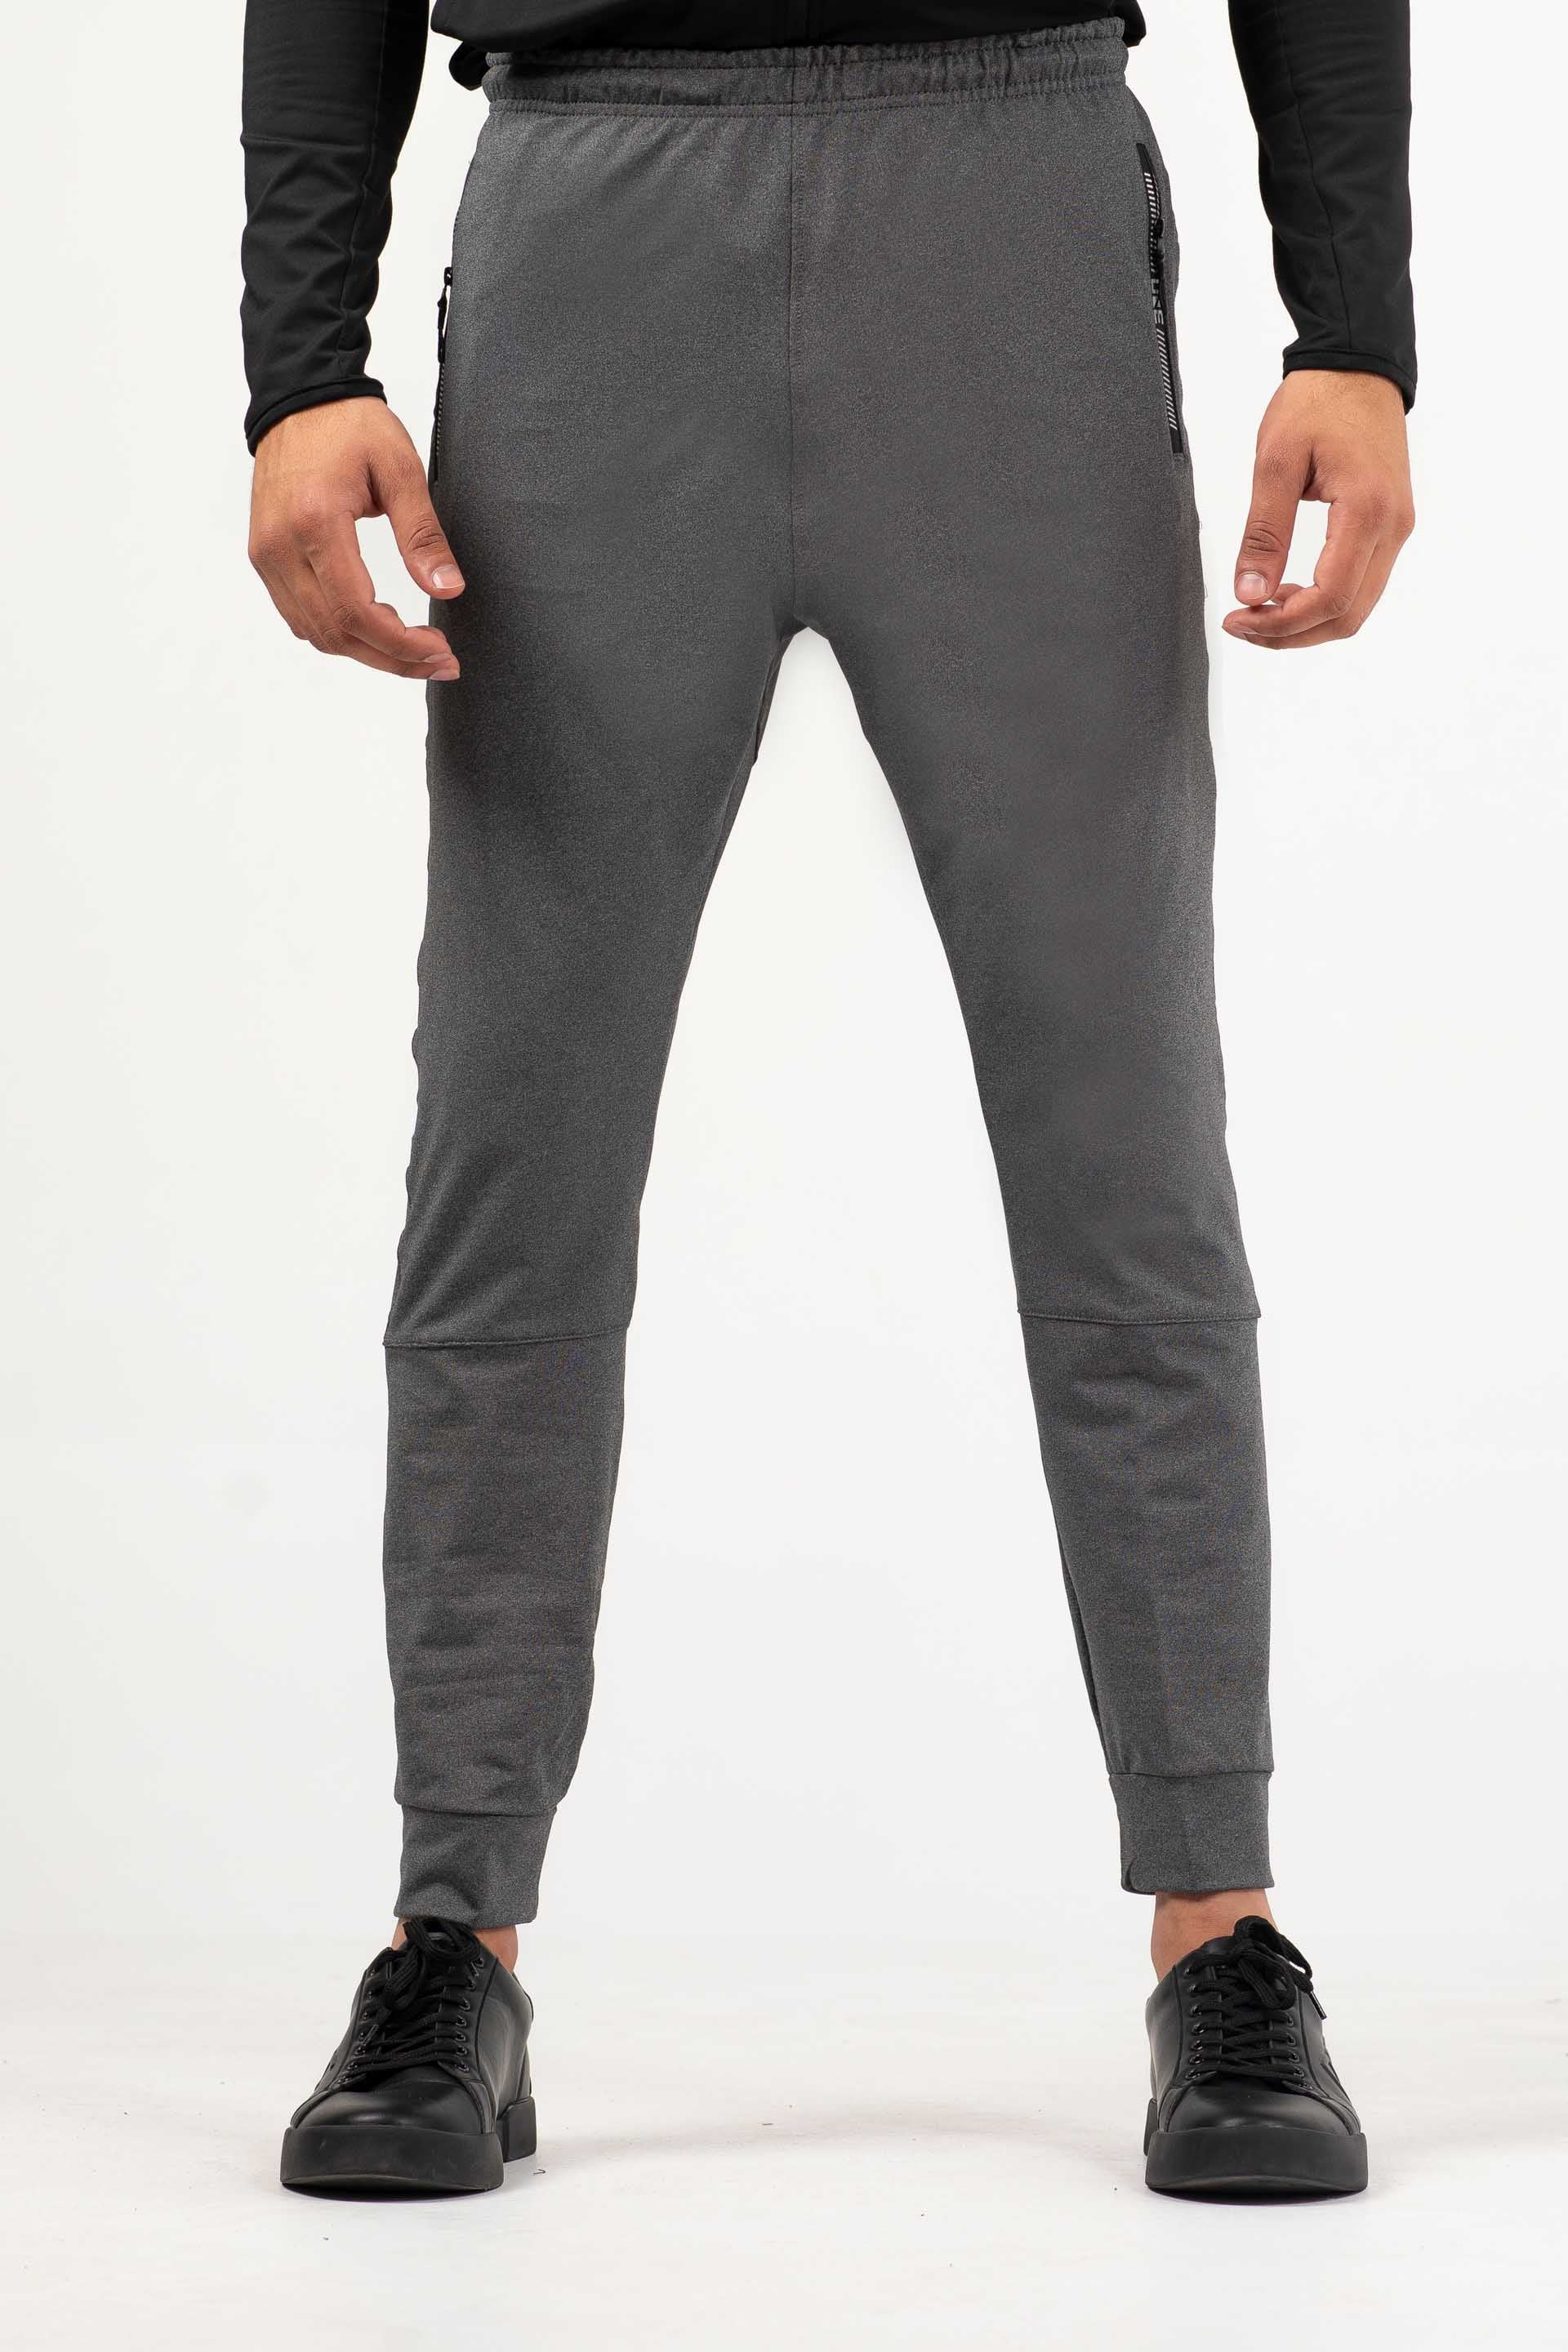 Gym Pants Grey